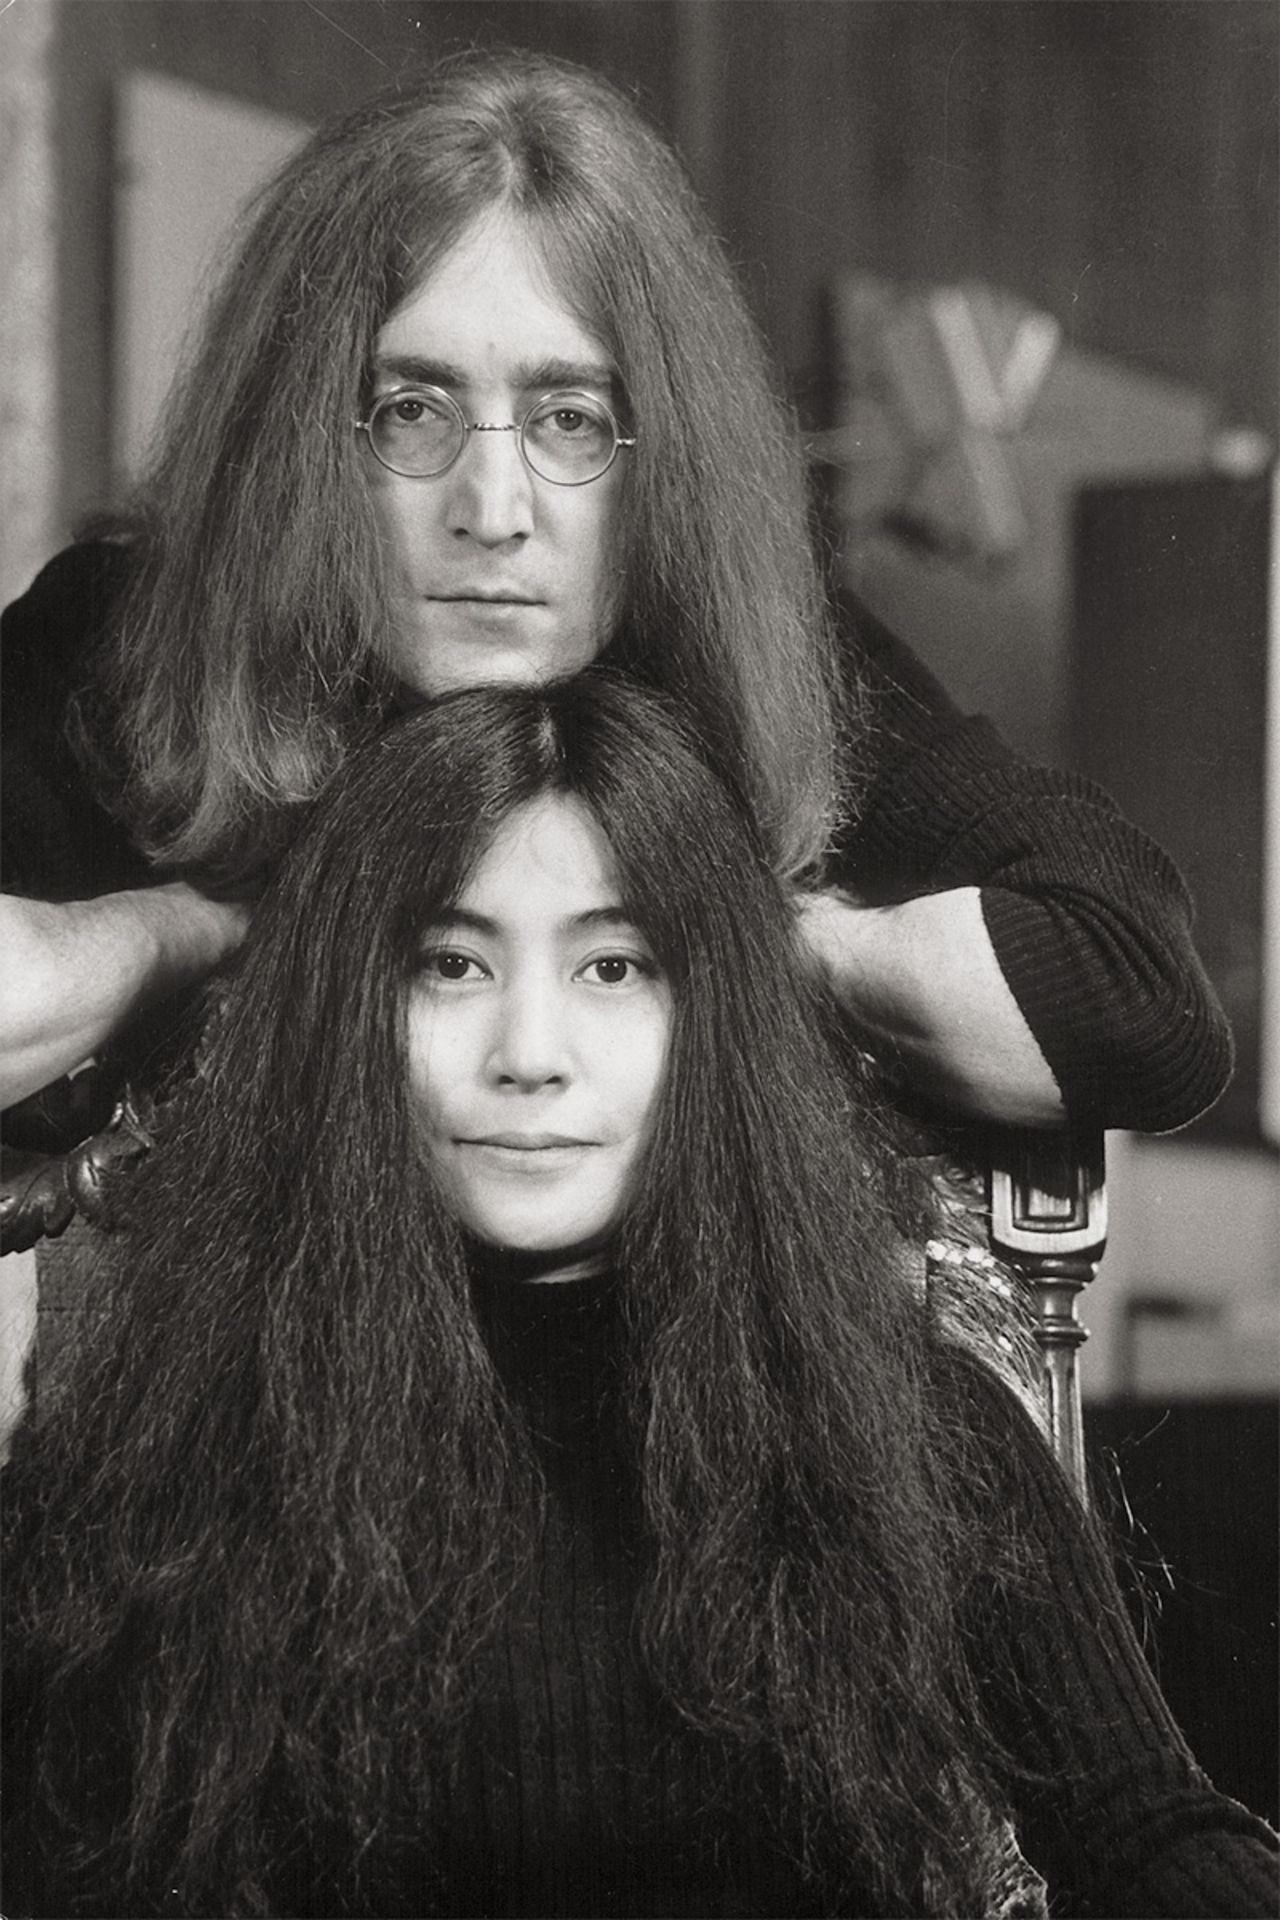 Blau, Tom: John Lennon and Yoko Ono in N.Y.